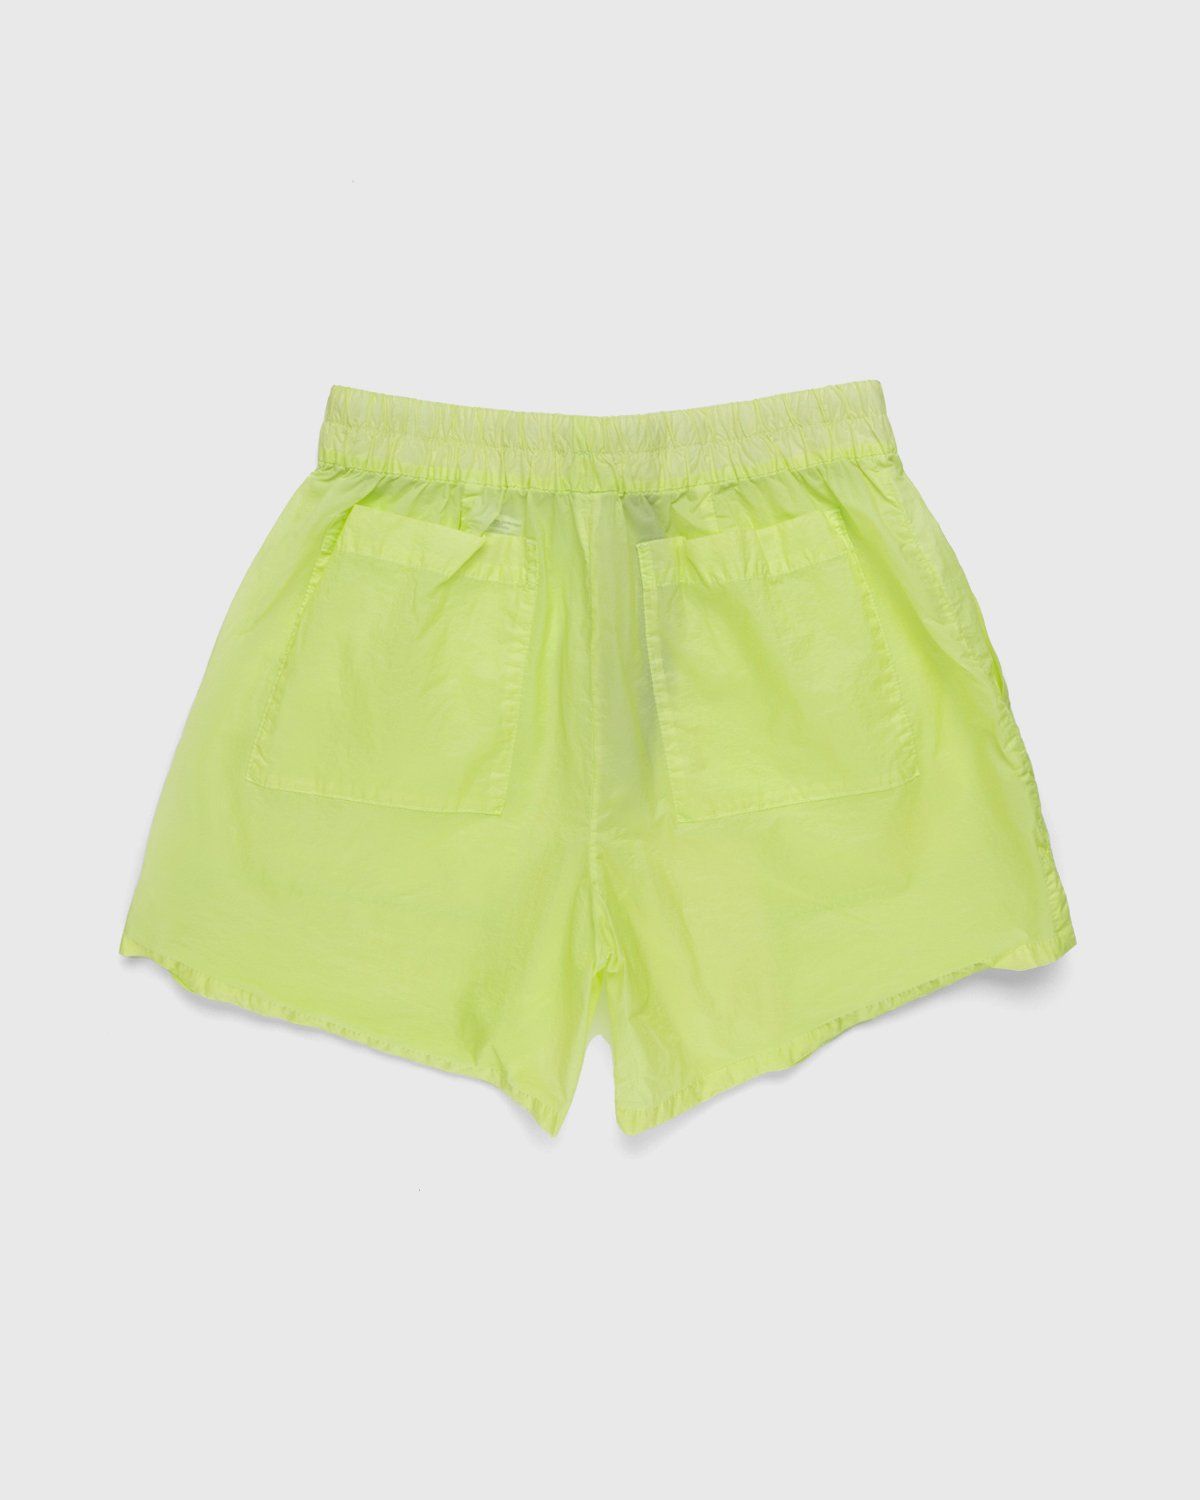 Dries Van Noten – Pooles Shorts Lime - Image 2